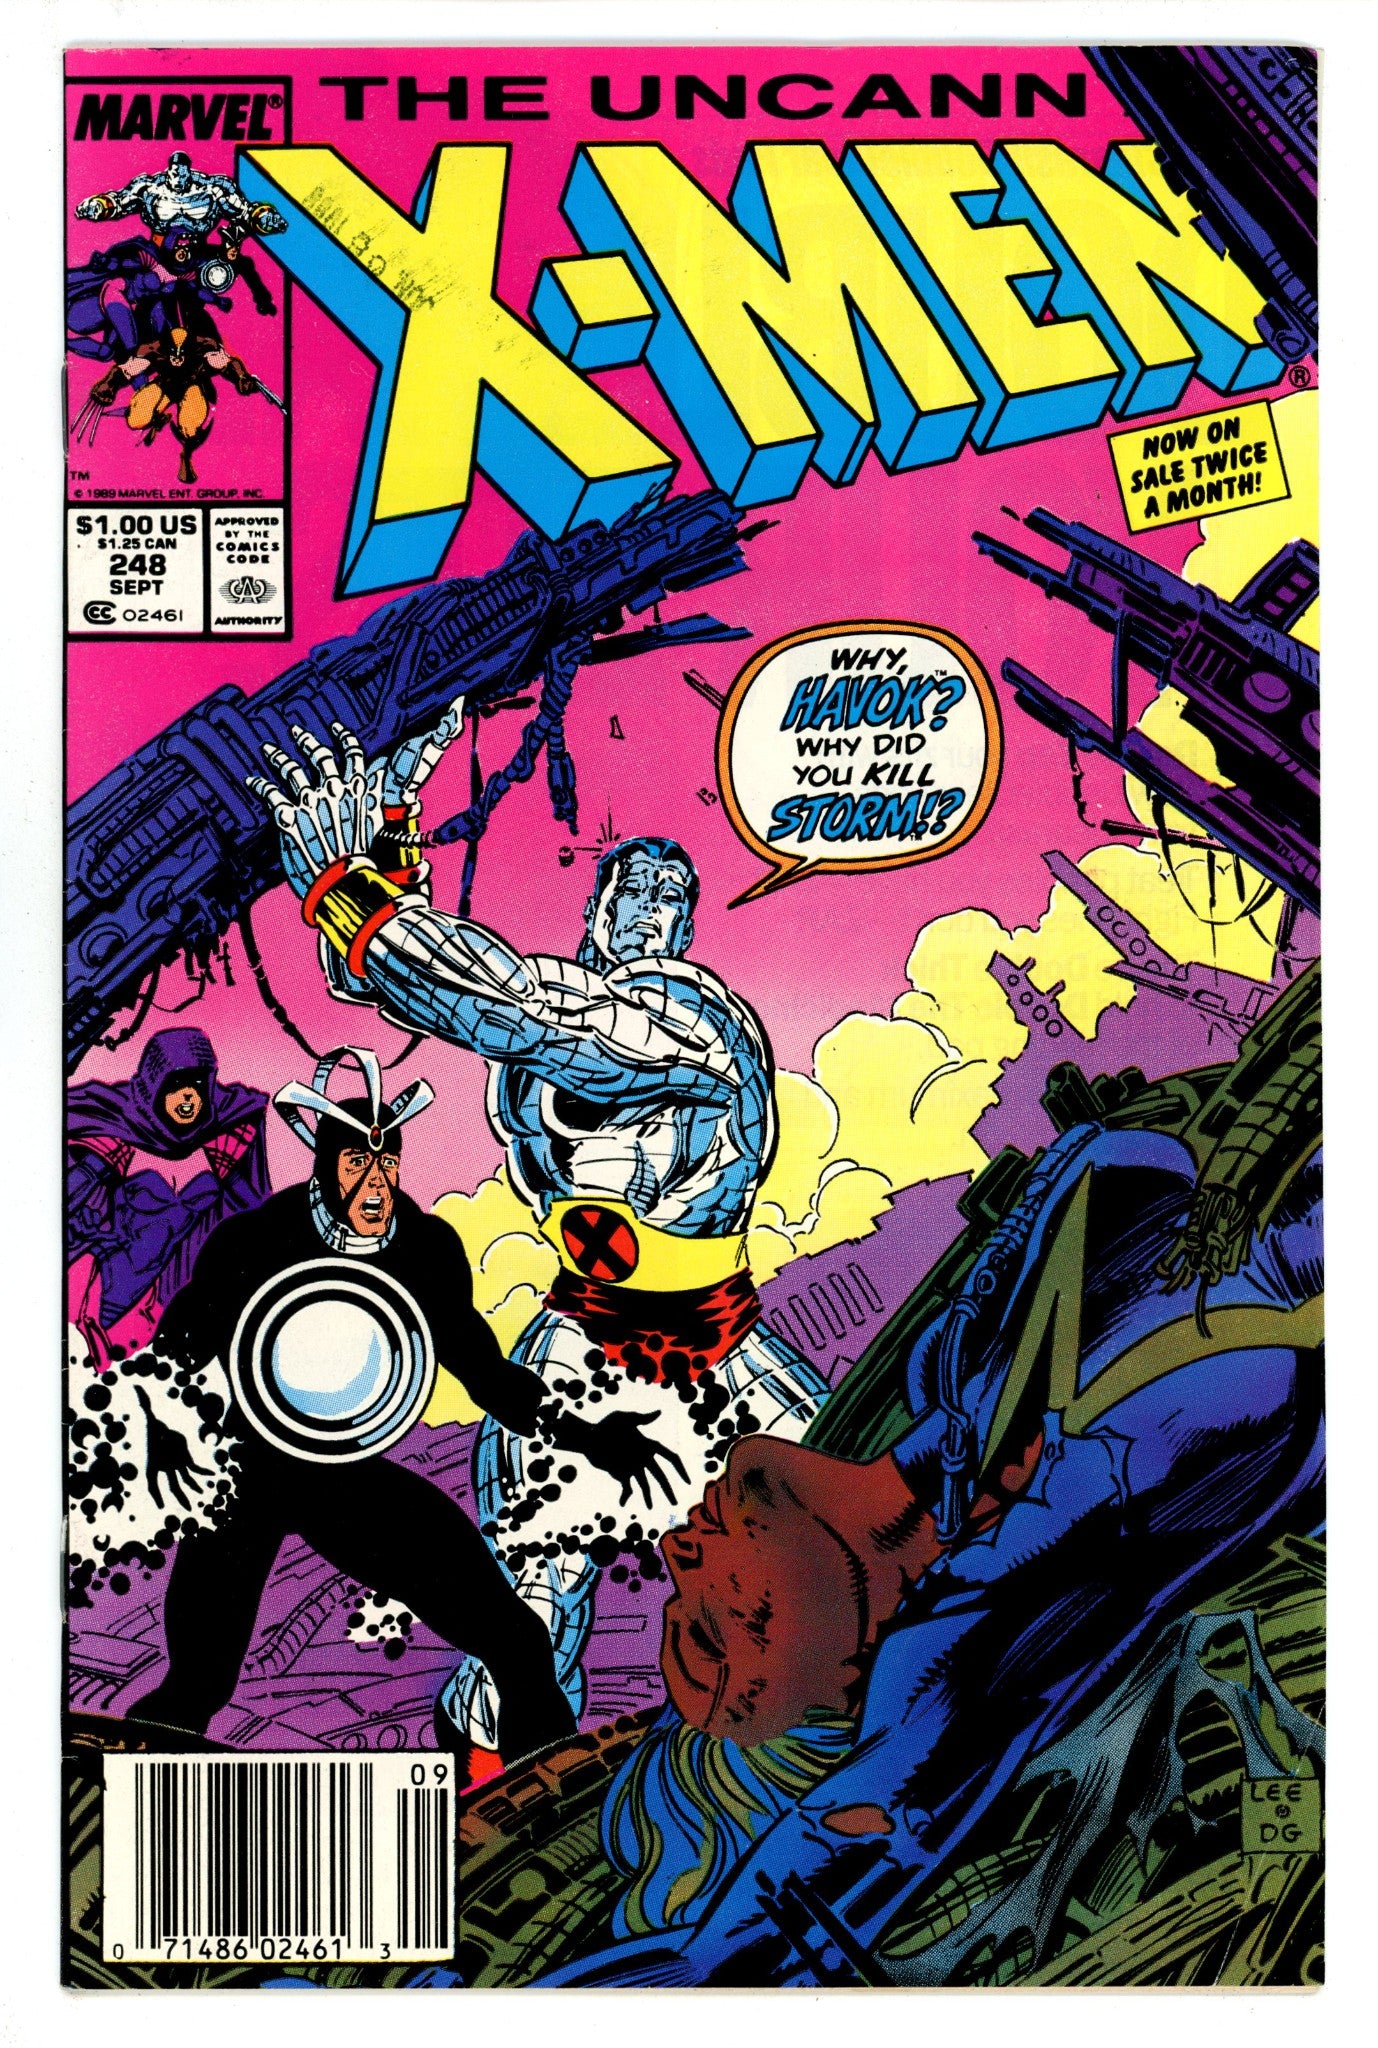 The Uncanny X-Men Vol 1 248 FN/VF (7.0) (1989) Newsstand 